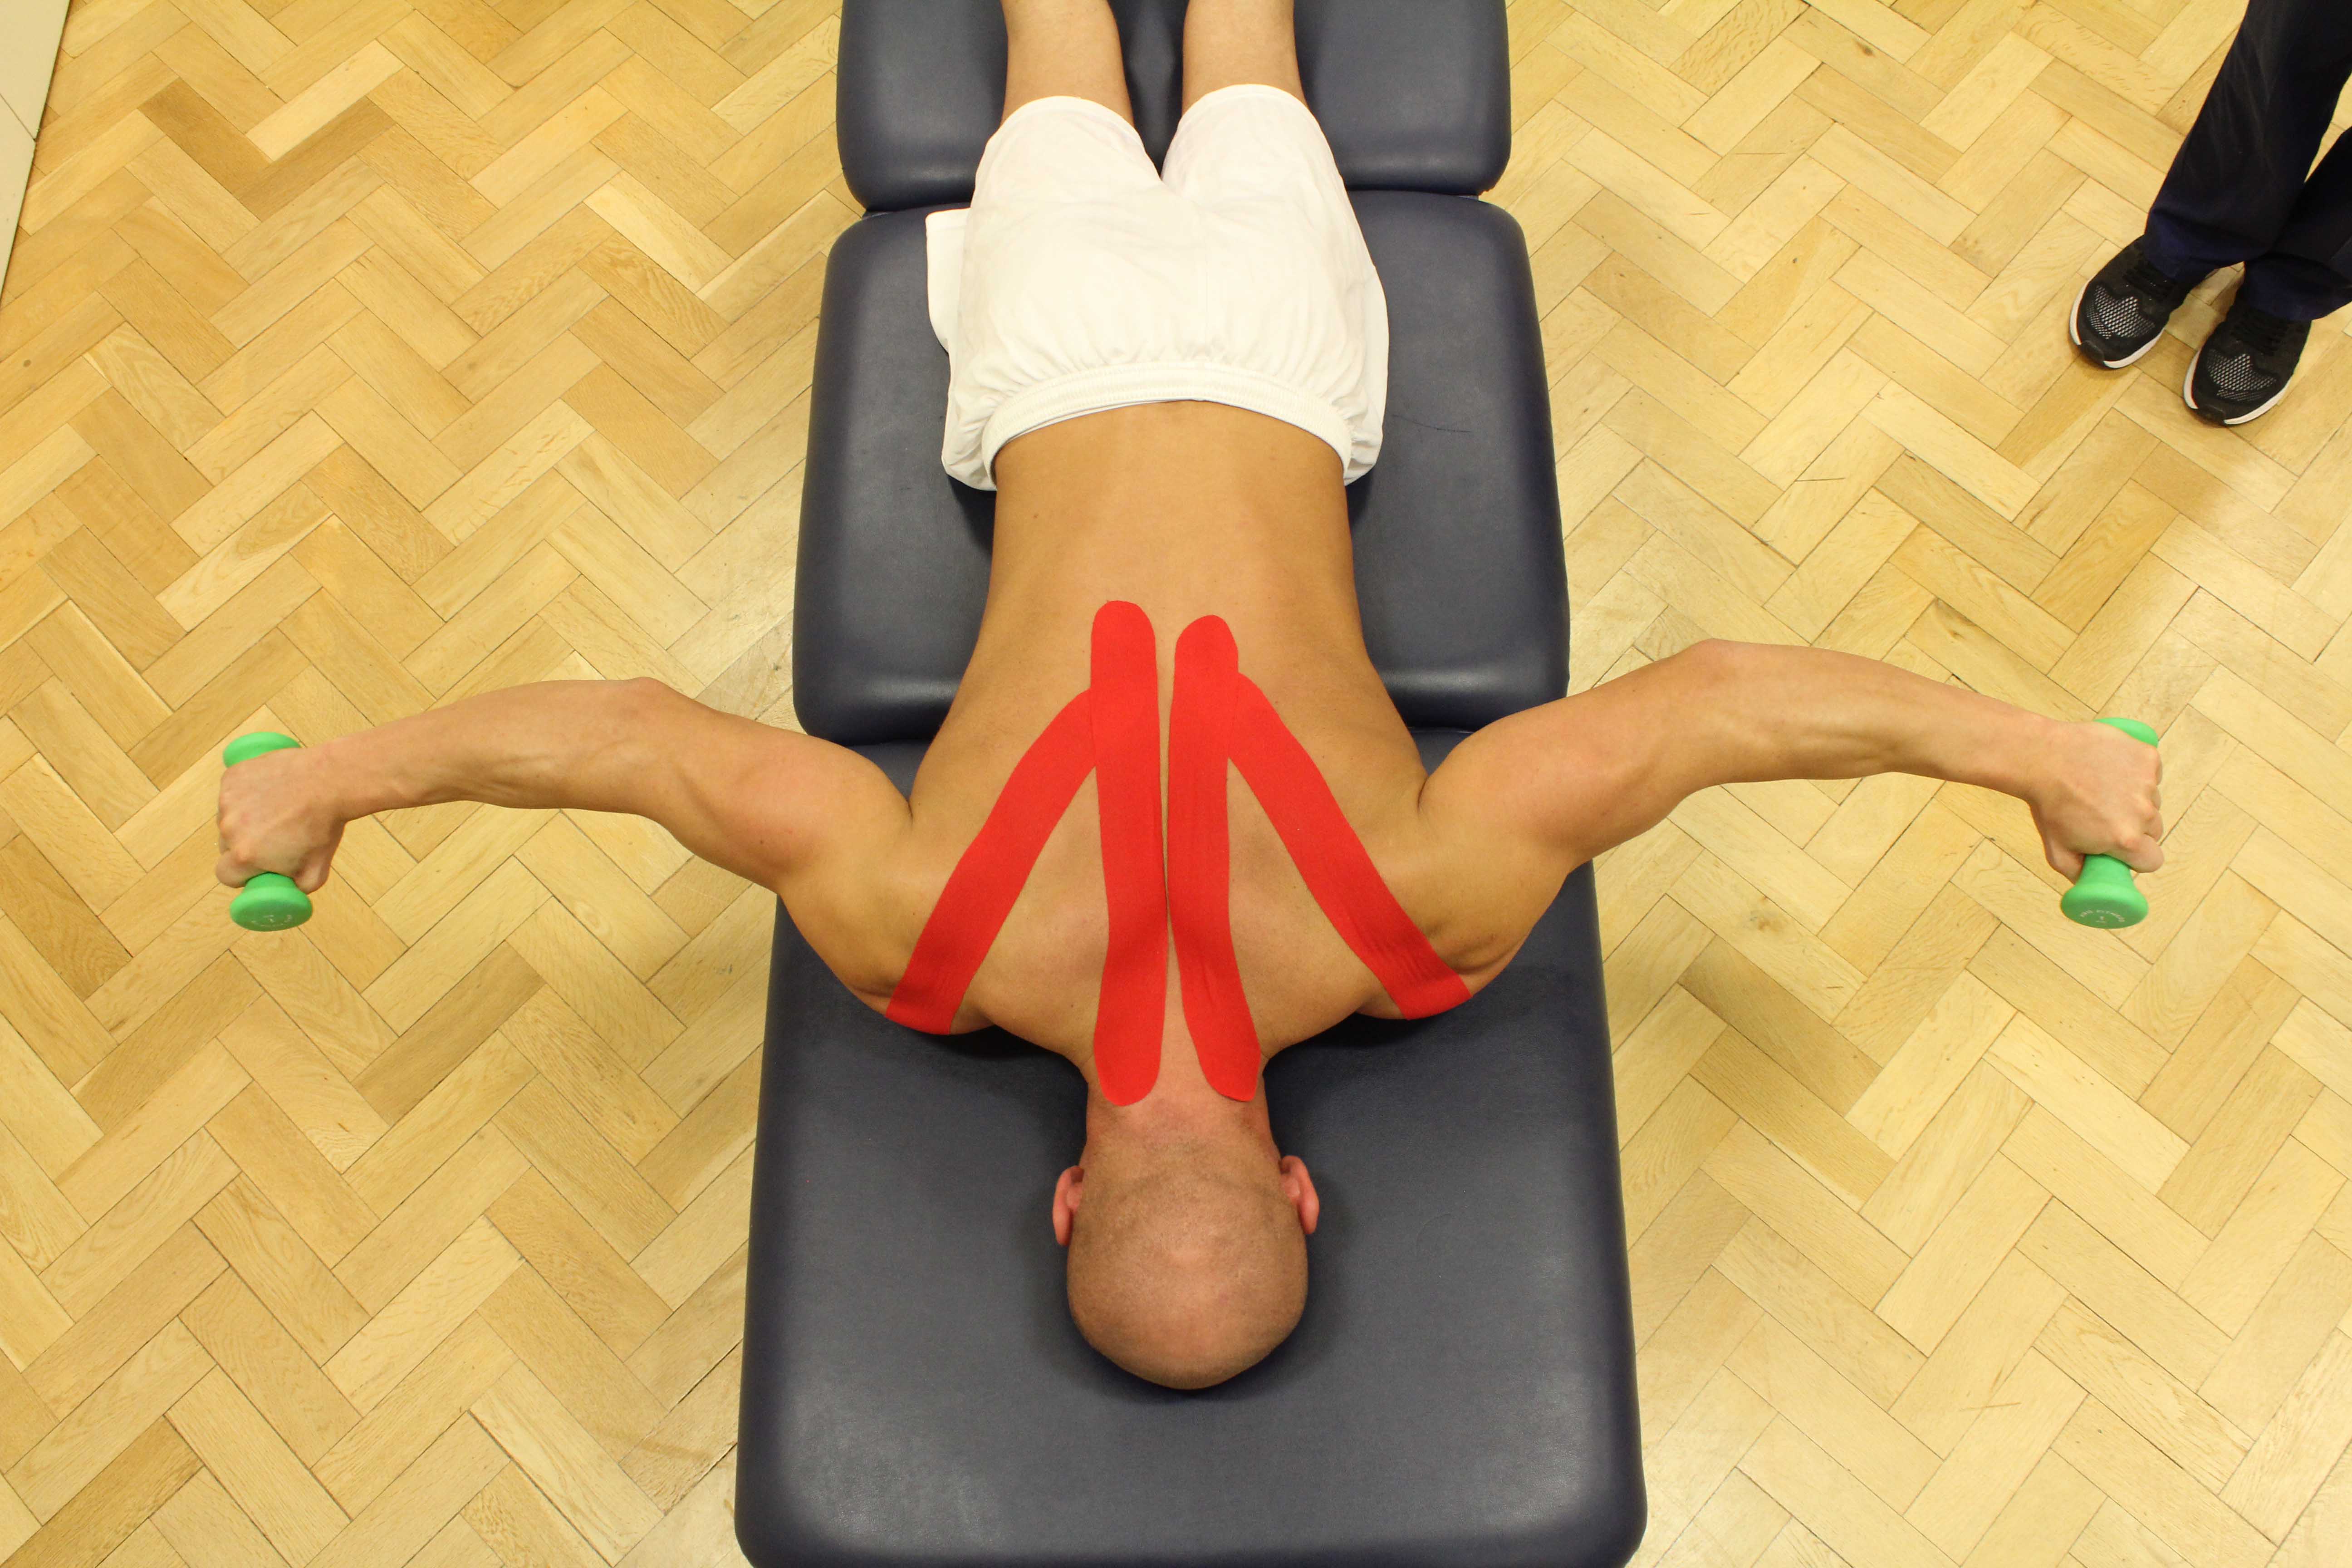 Progressive strengthening exercises isolating the upper back muscles